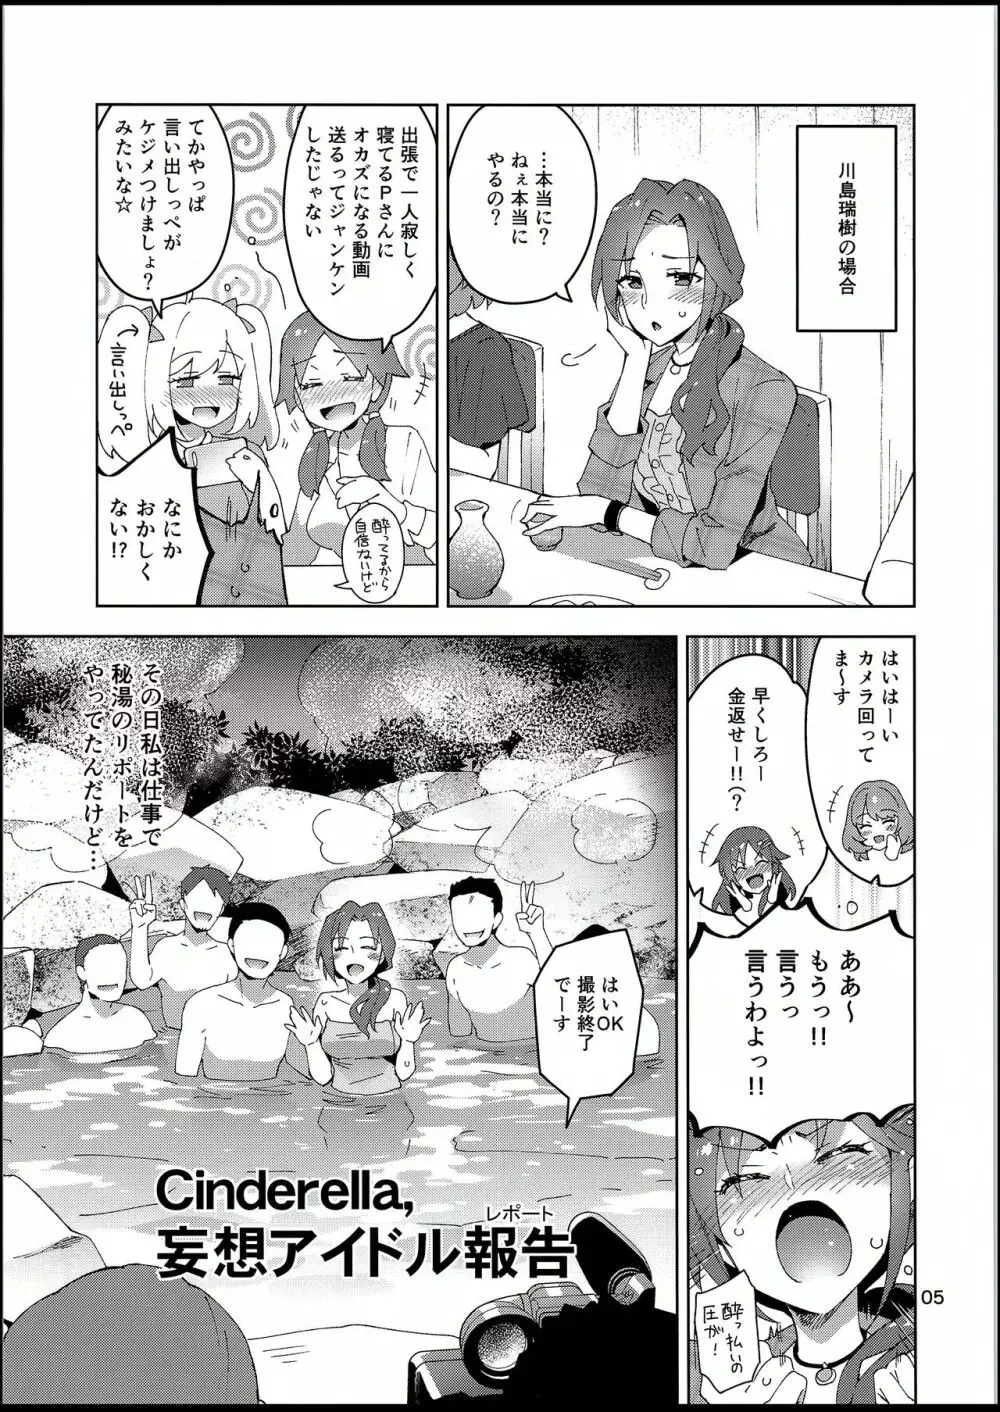 Cinderella, 妄想アイドル報告 準備号 - page4